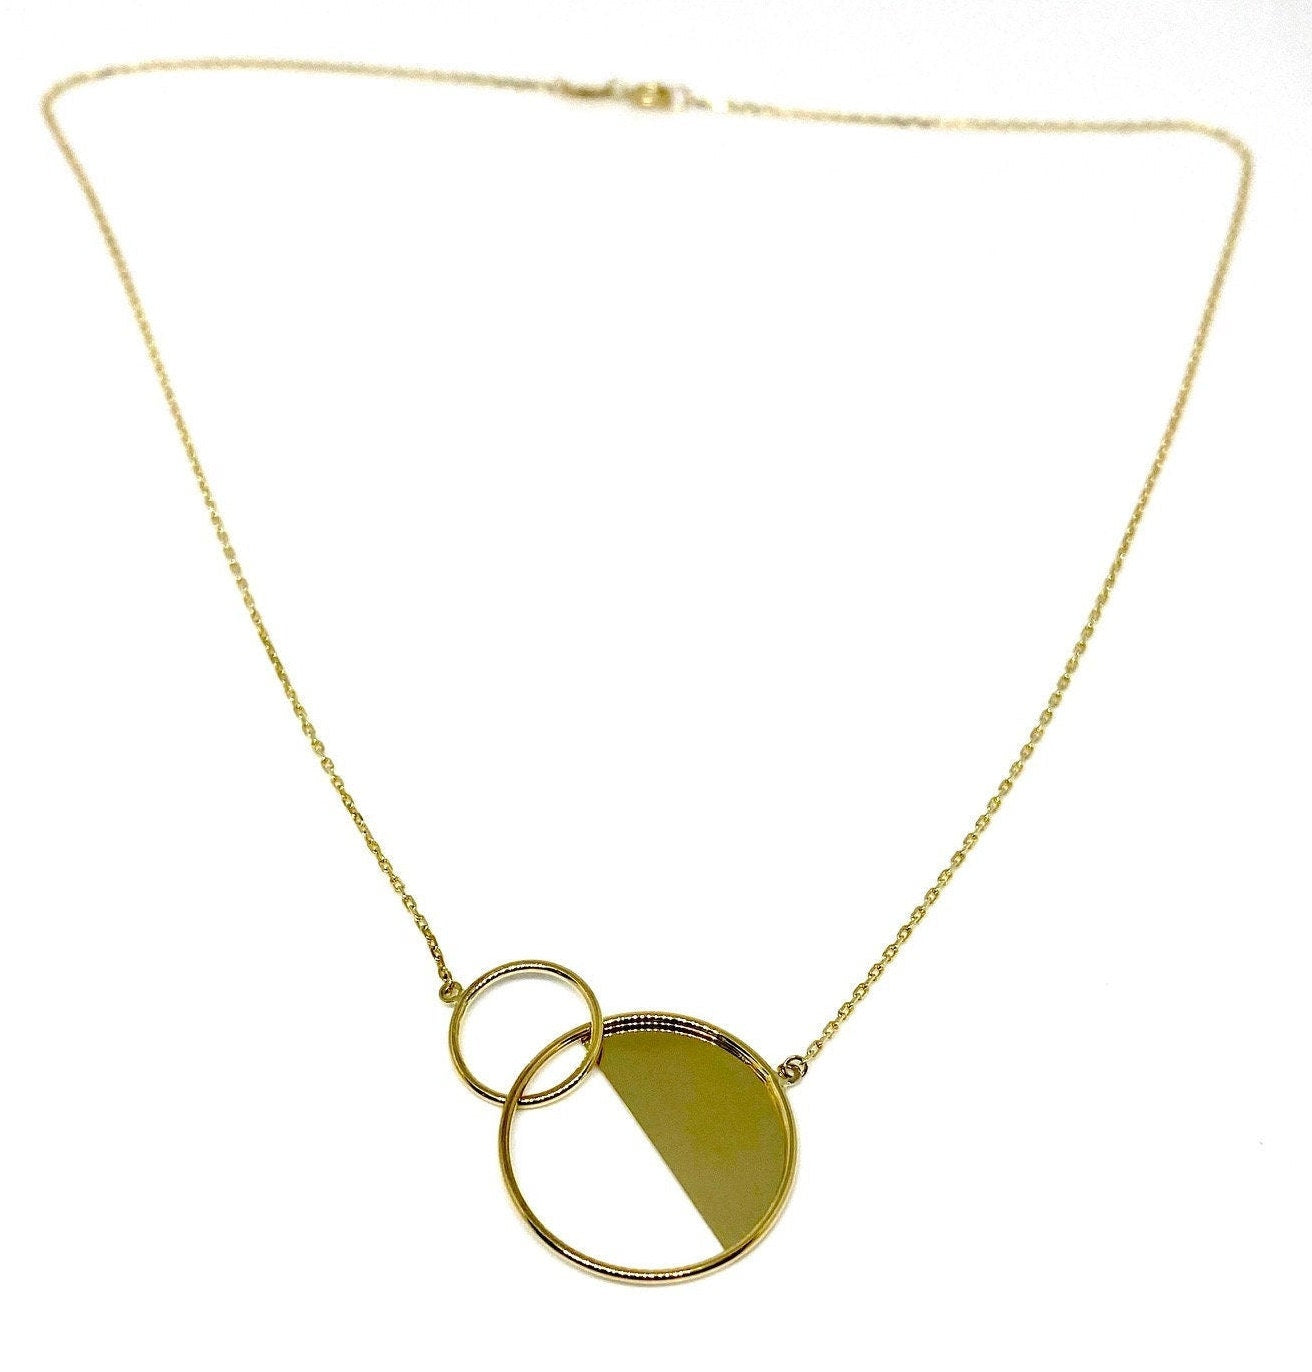 Yellow Gold Round Geometric Circle Pendant Chain Necklace